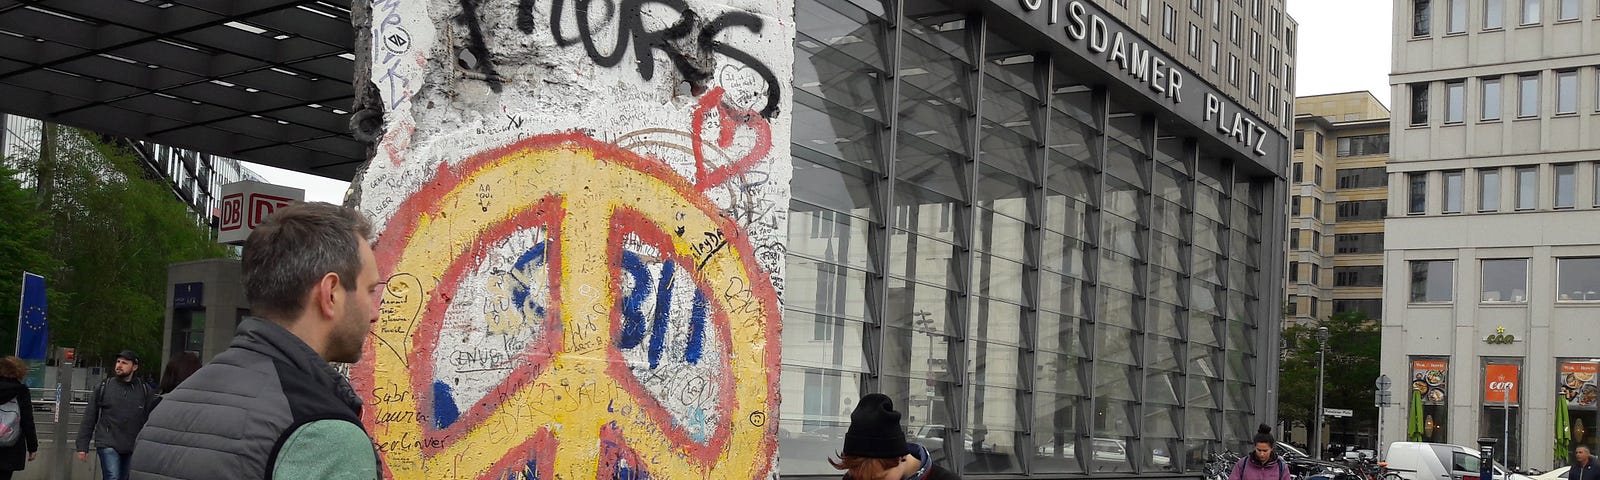 graffiti covered fragment of Berlin Wall at Potsdamer Platz